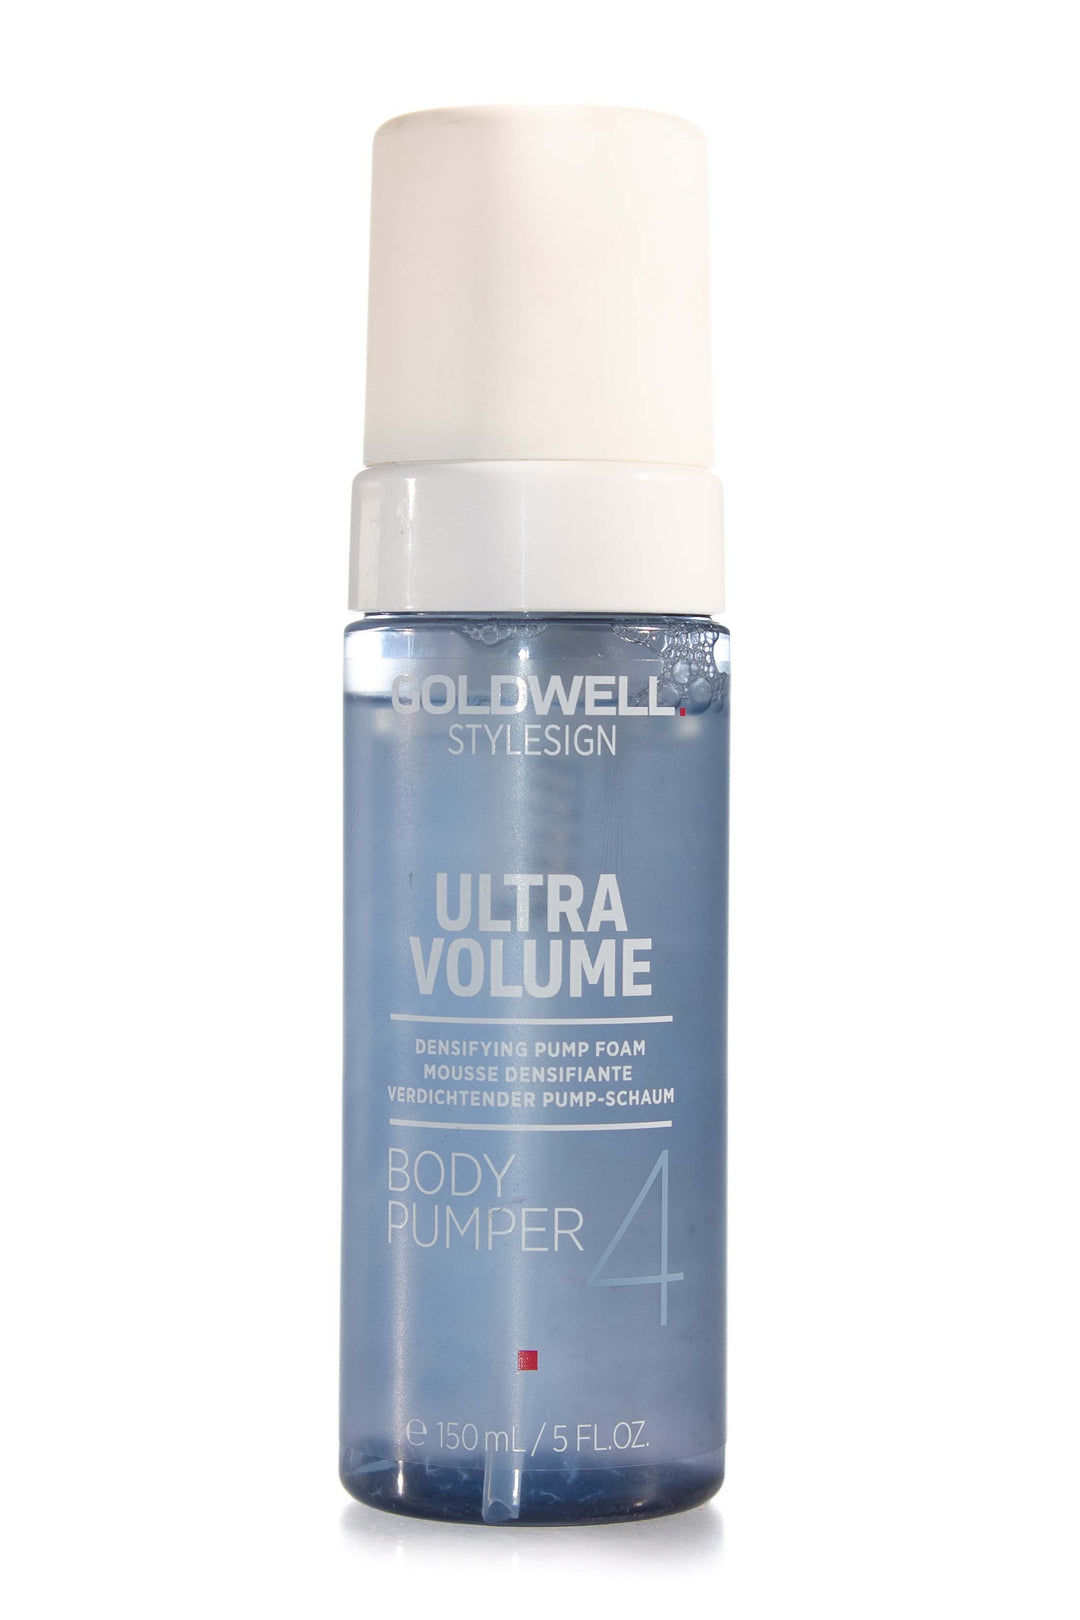 GOLDWELL Stylesign Ultra Volume Body Pumper | 150ml